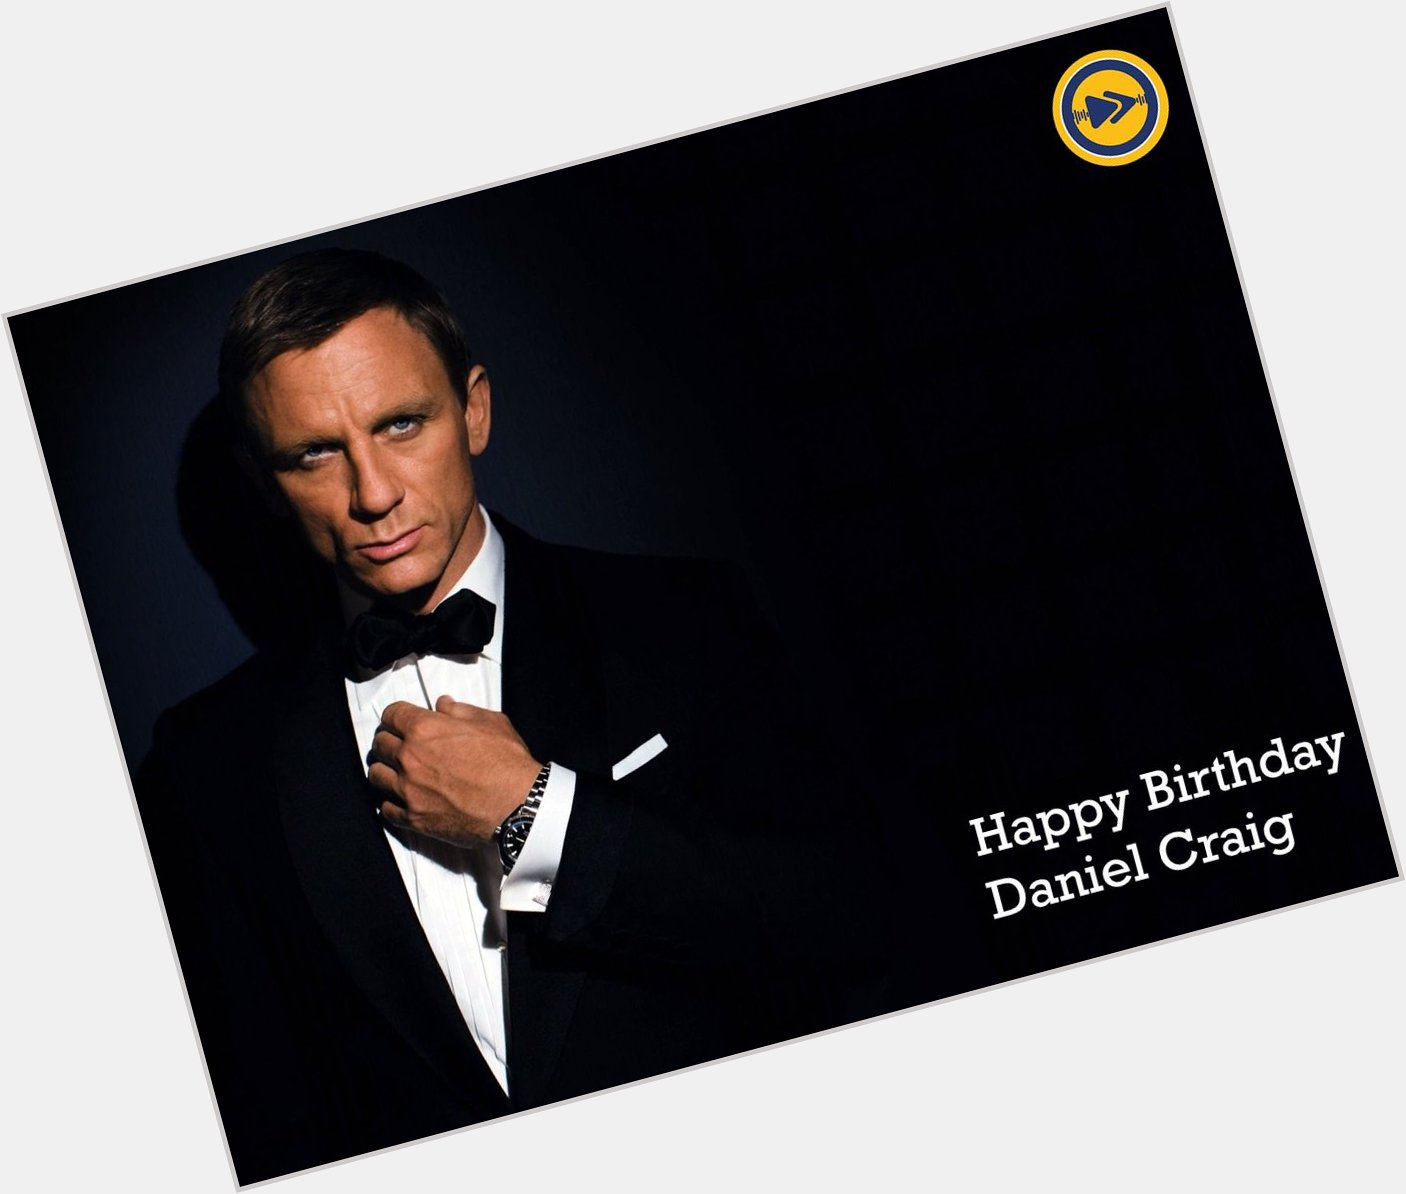 Happy birthday to the current James Bond of Daniel Craig 